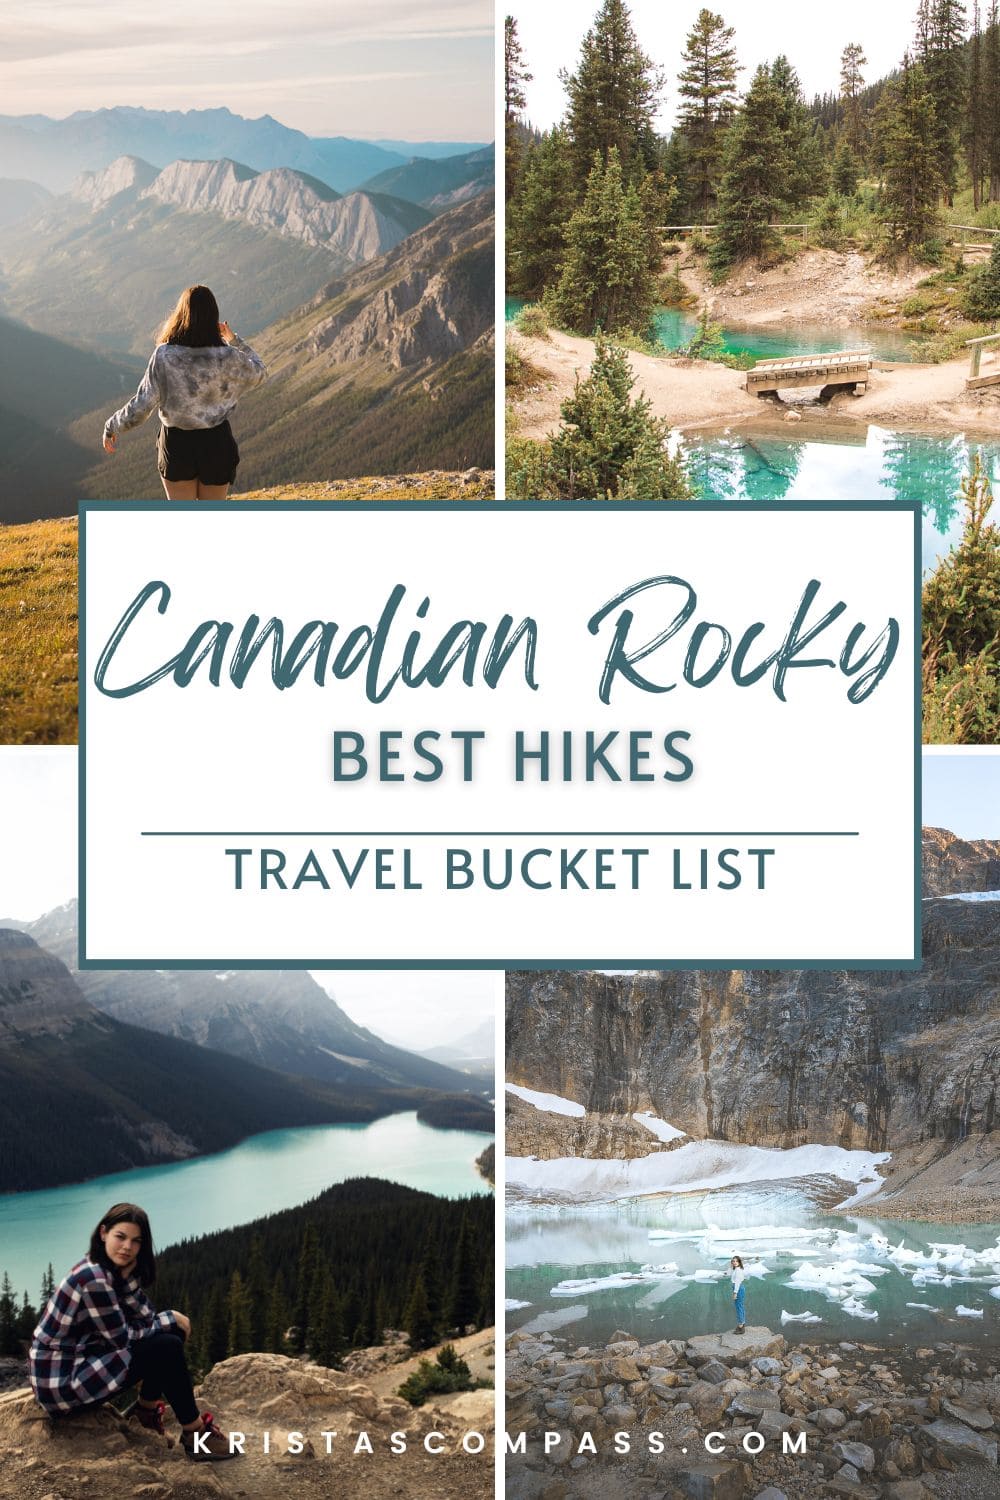 canadian rockies road trip bucket list - canadian rockies best hikes pinterest pin